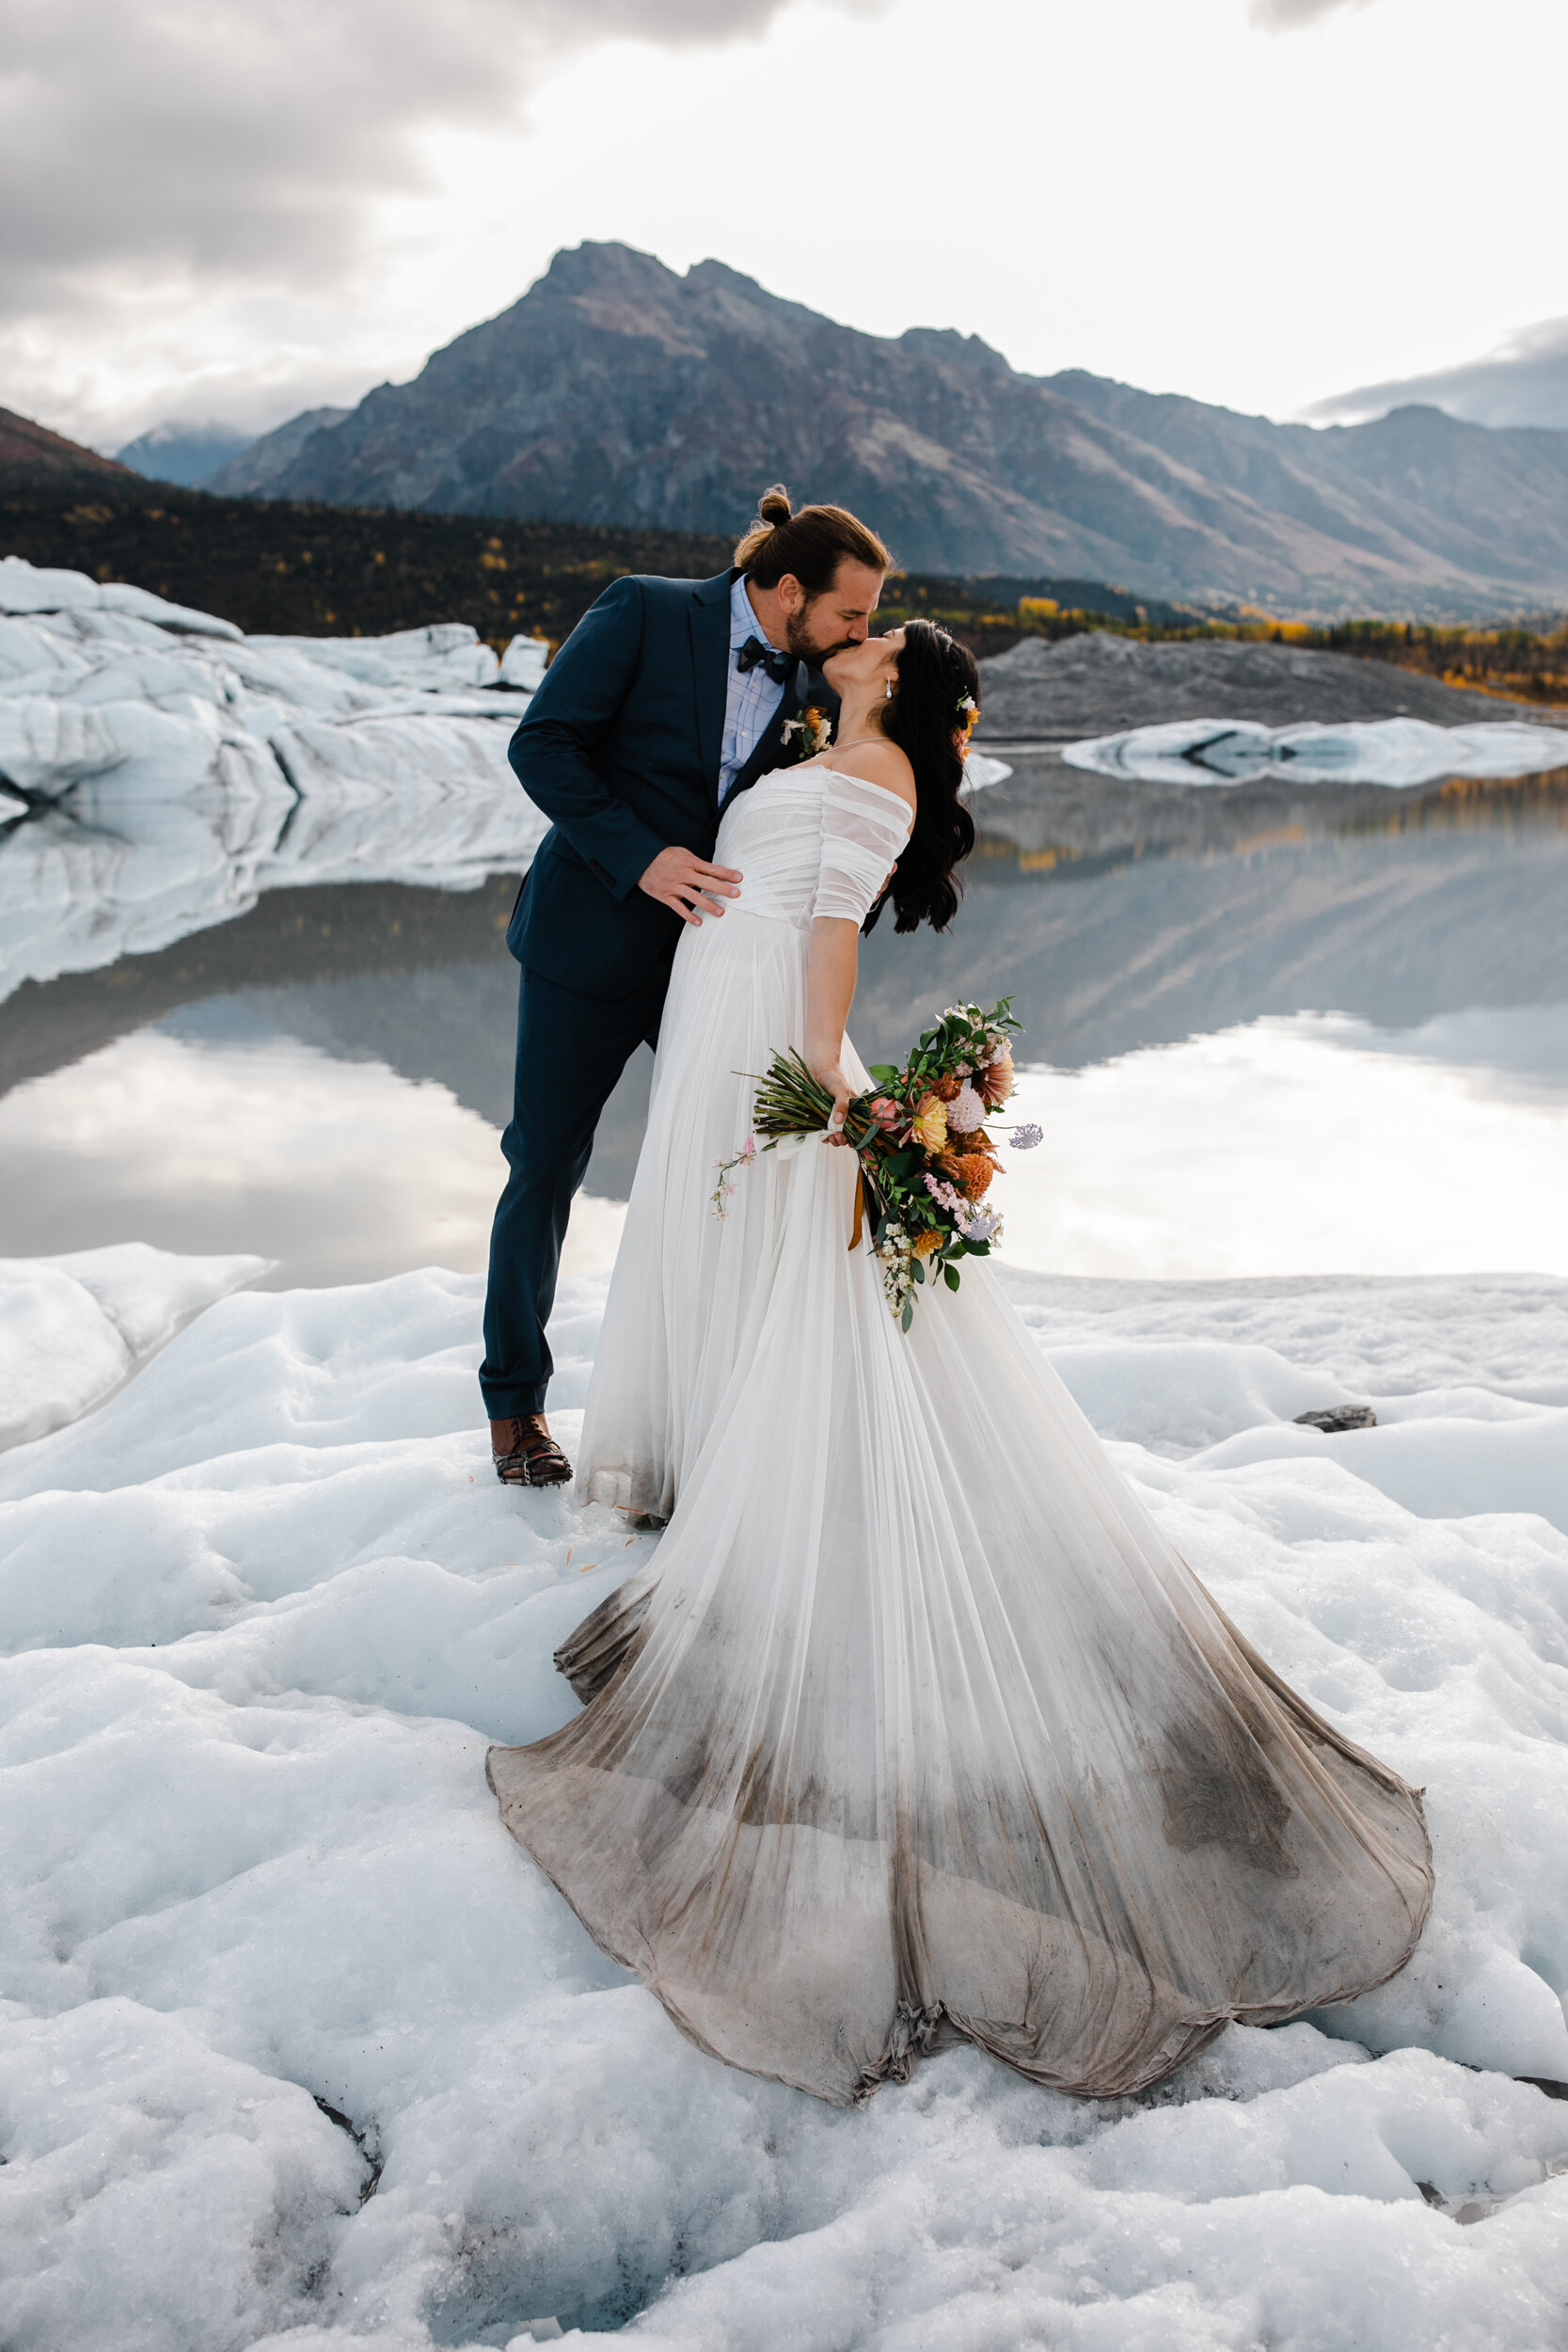 Alaska Elopement | Autumn Adventure Wedding Inspiration | The Hearnes Photography